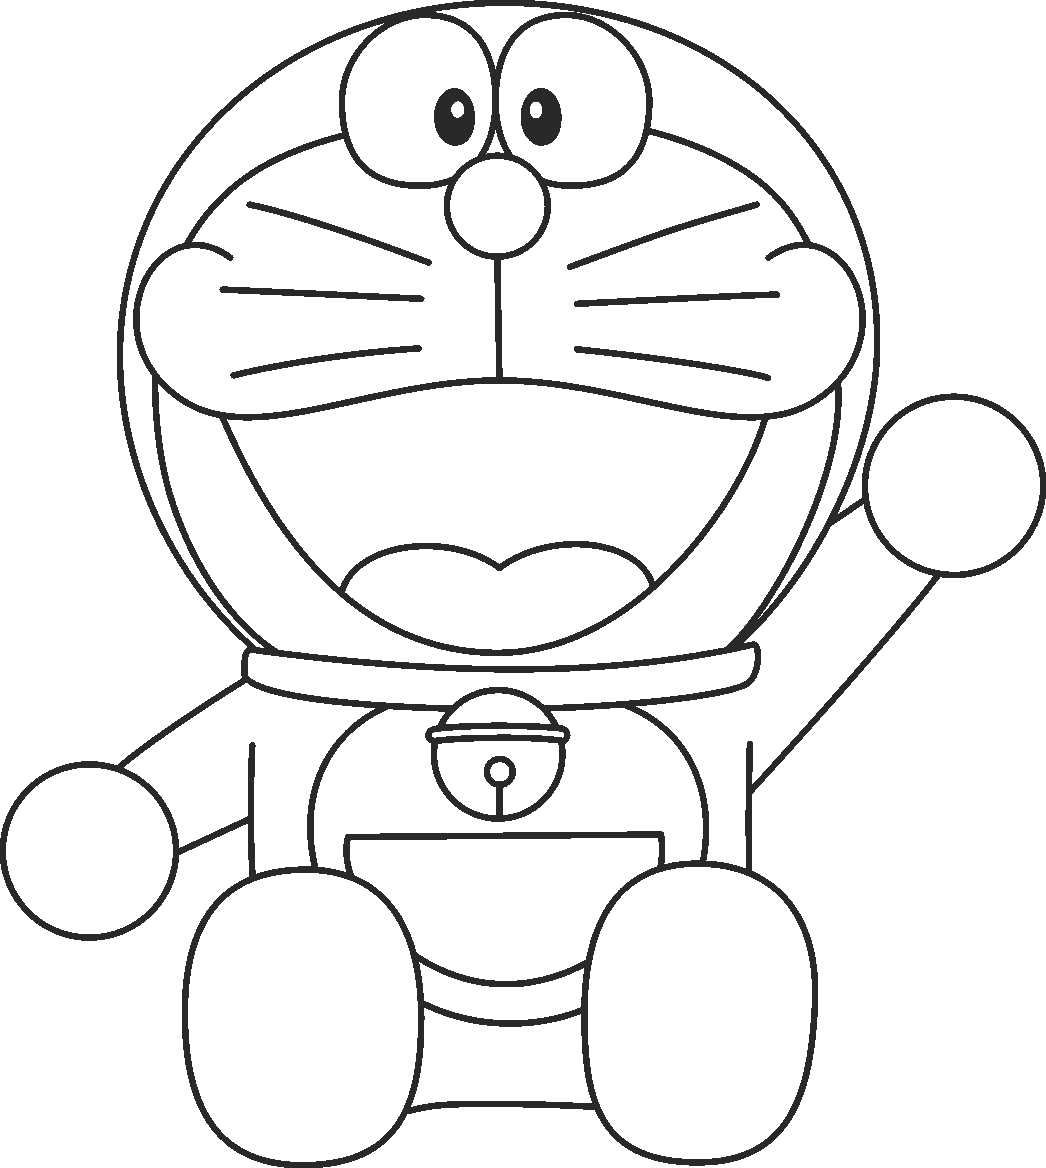 Kata Kata Hello Kitty  Search Results  Calendar 2015